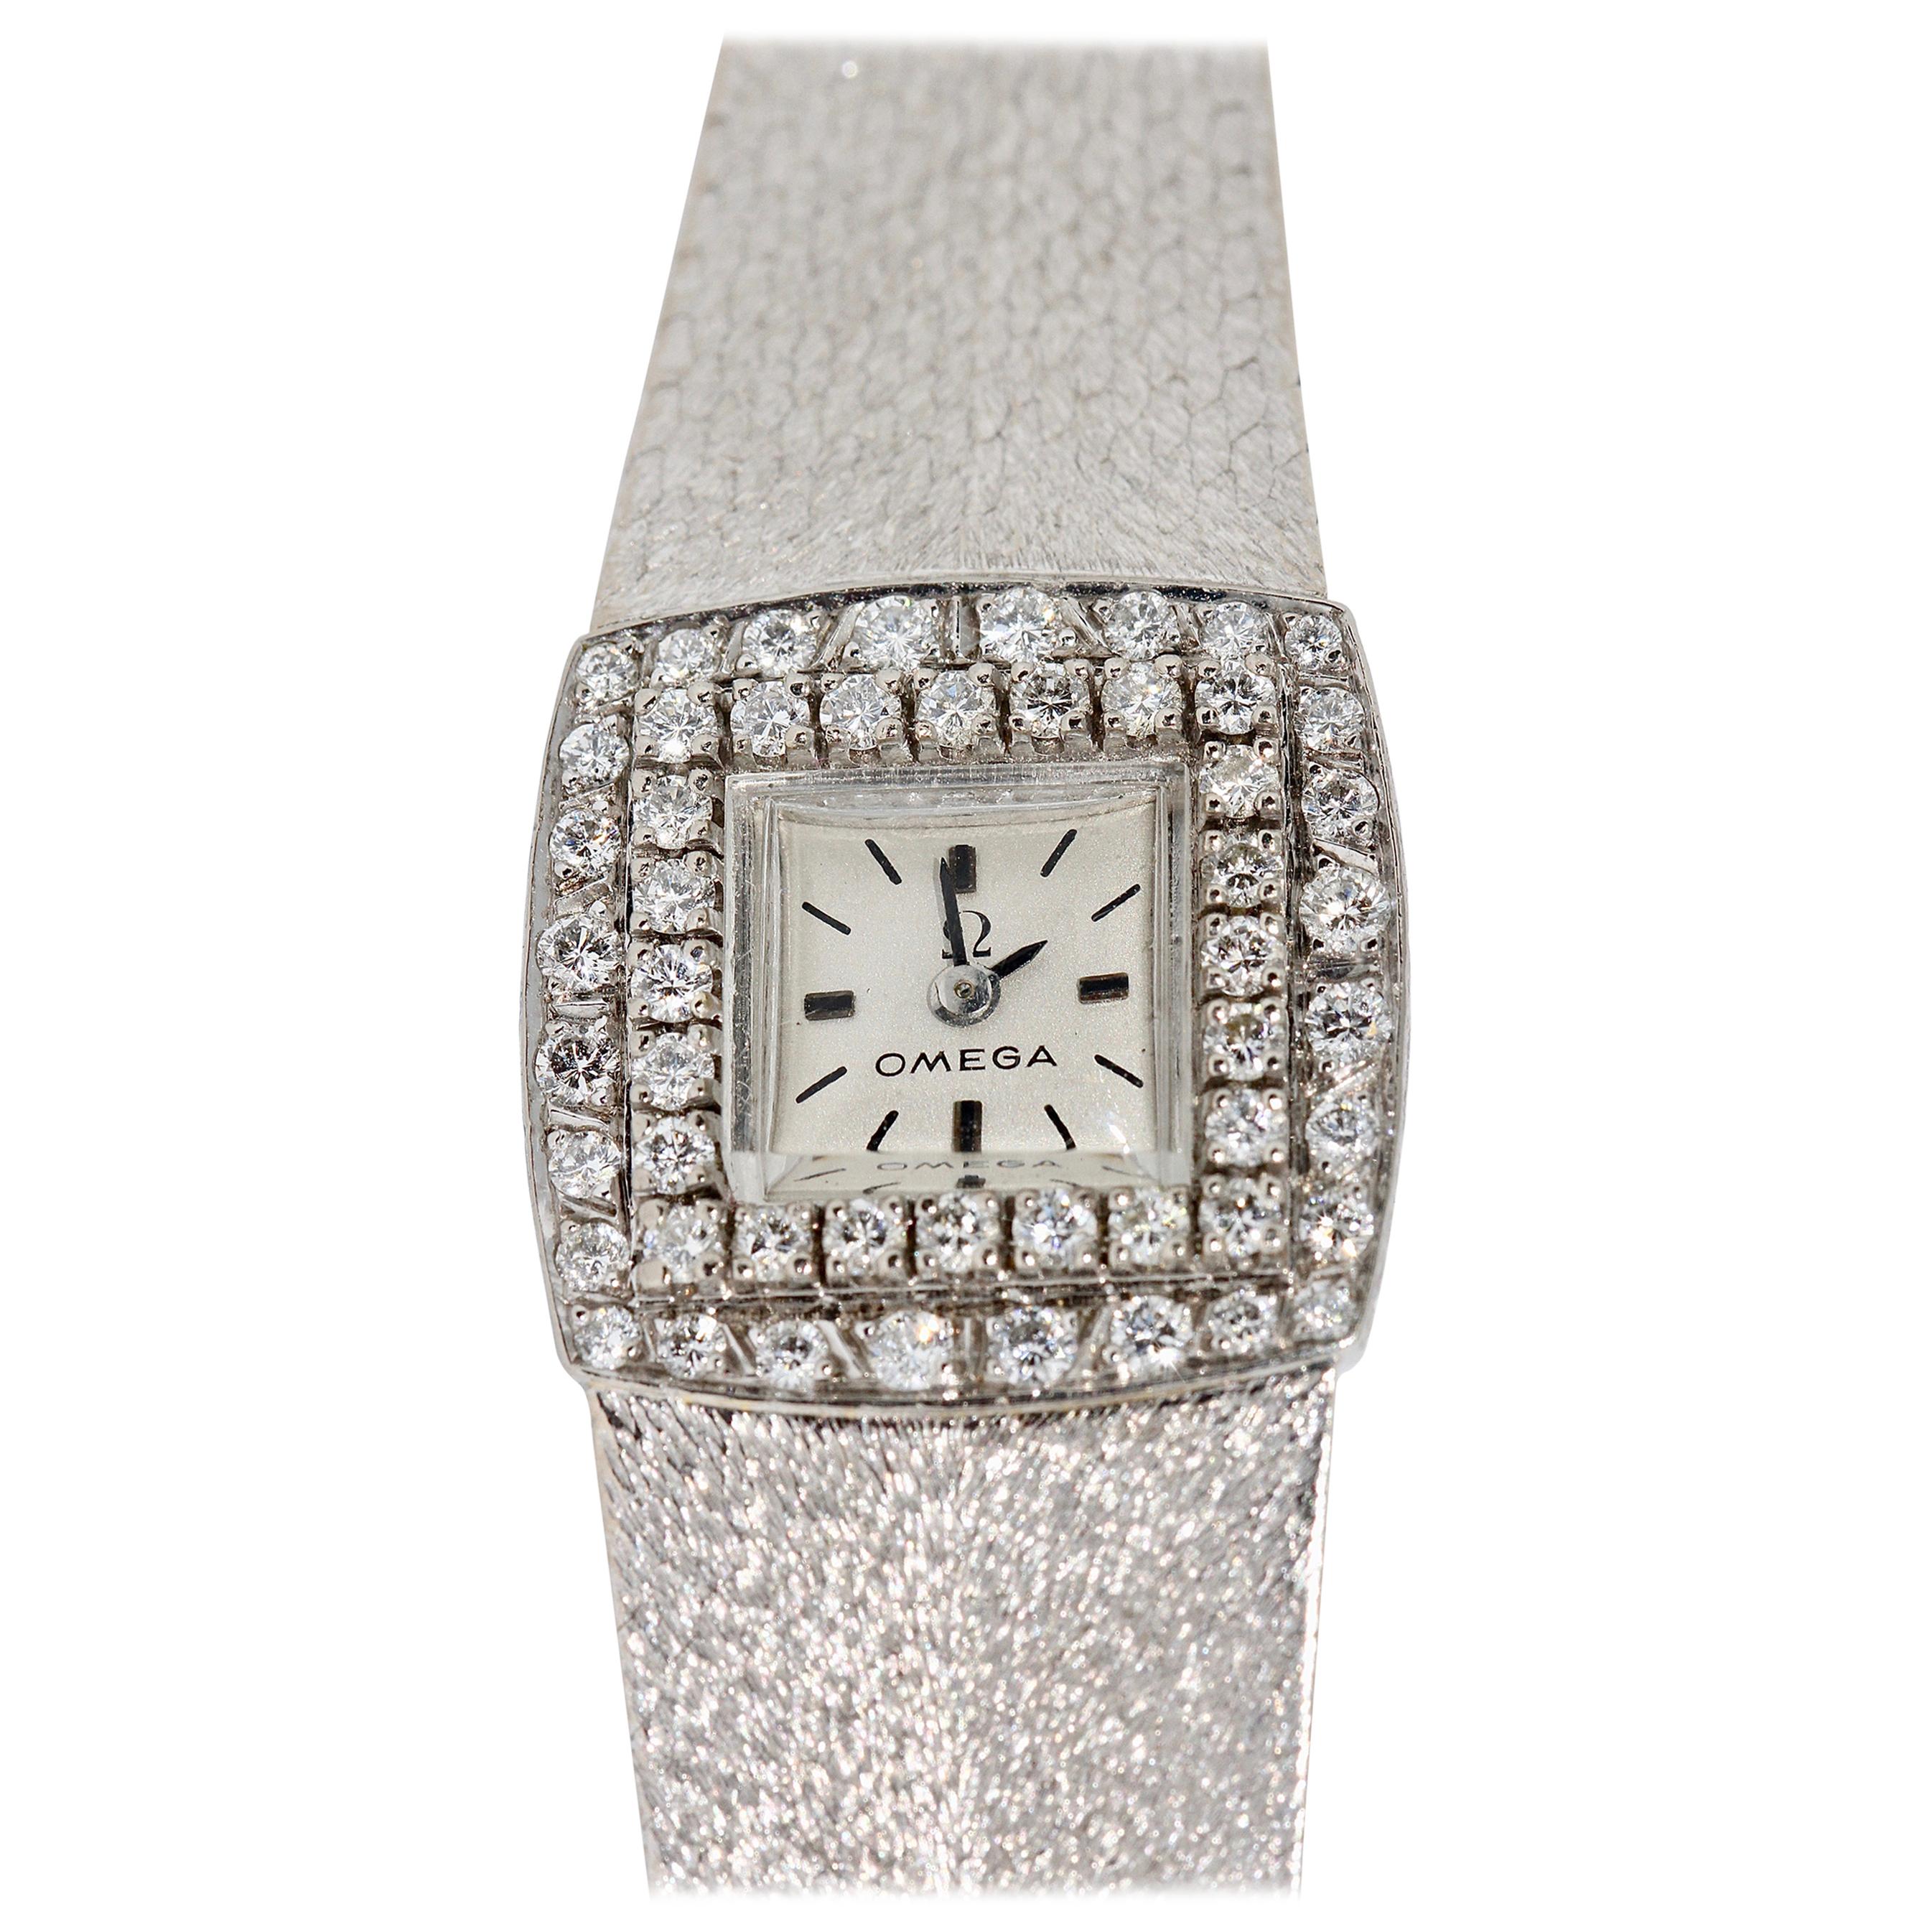 Omega Ladies Wristwatch, 18 Karat White Gold, with Diamonds, Manual Wind